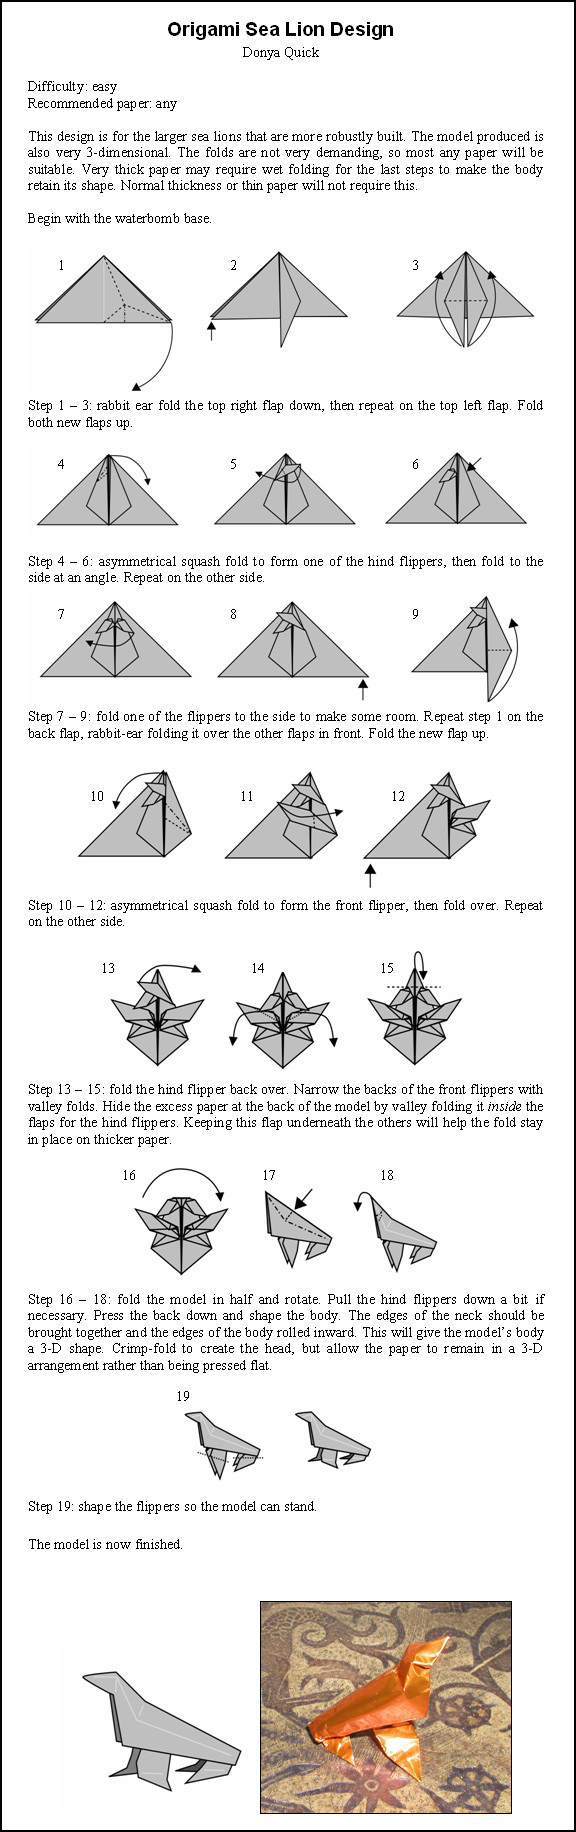 Origami Sea Lion Instructions